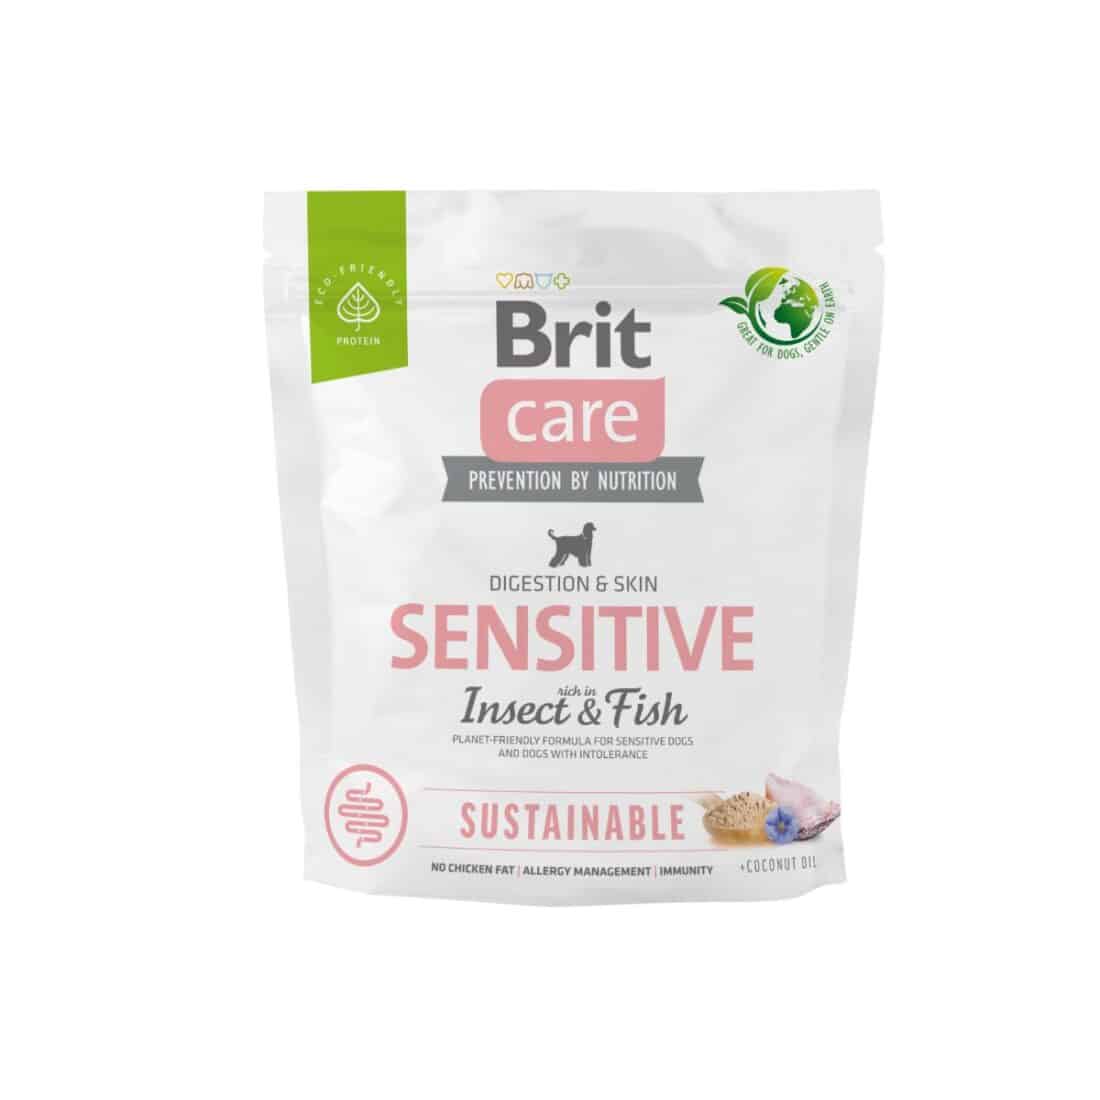 Brit Care – Sustainable – Sensitive-4